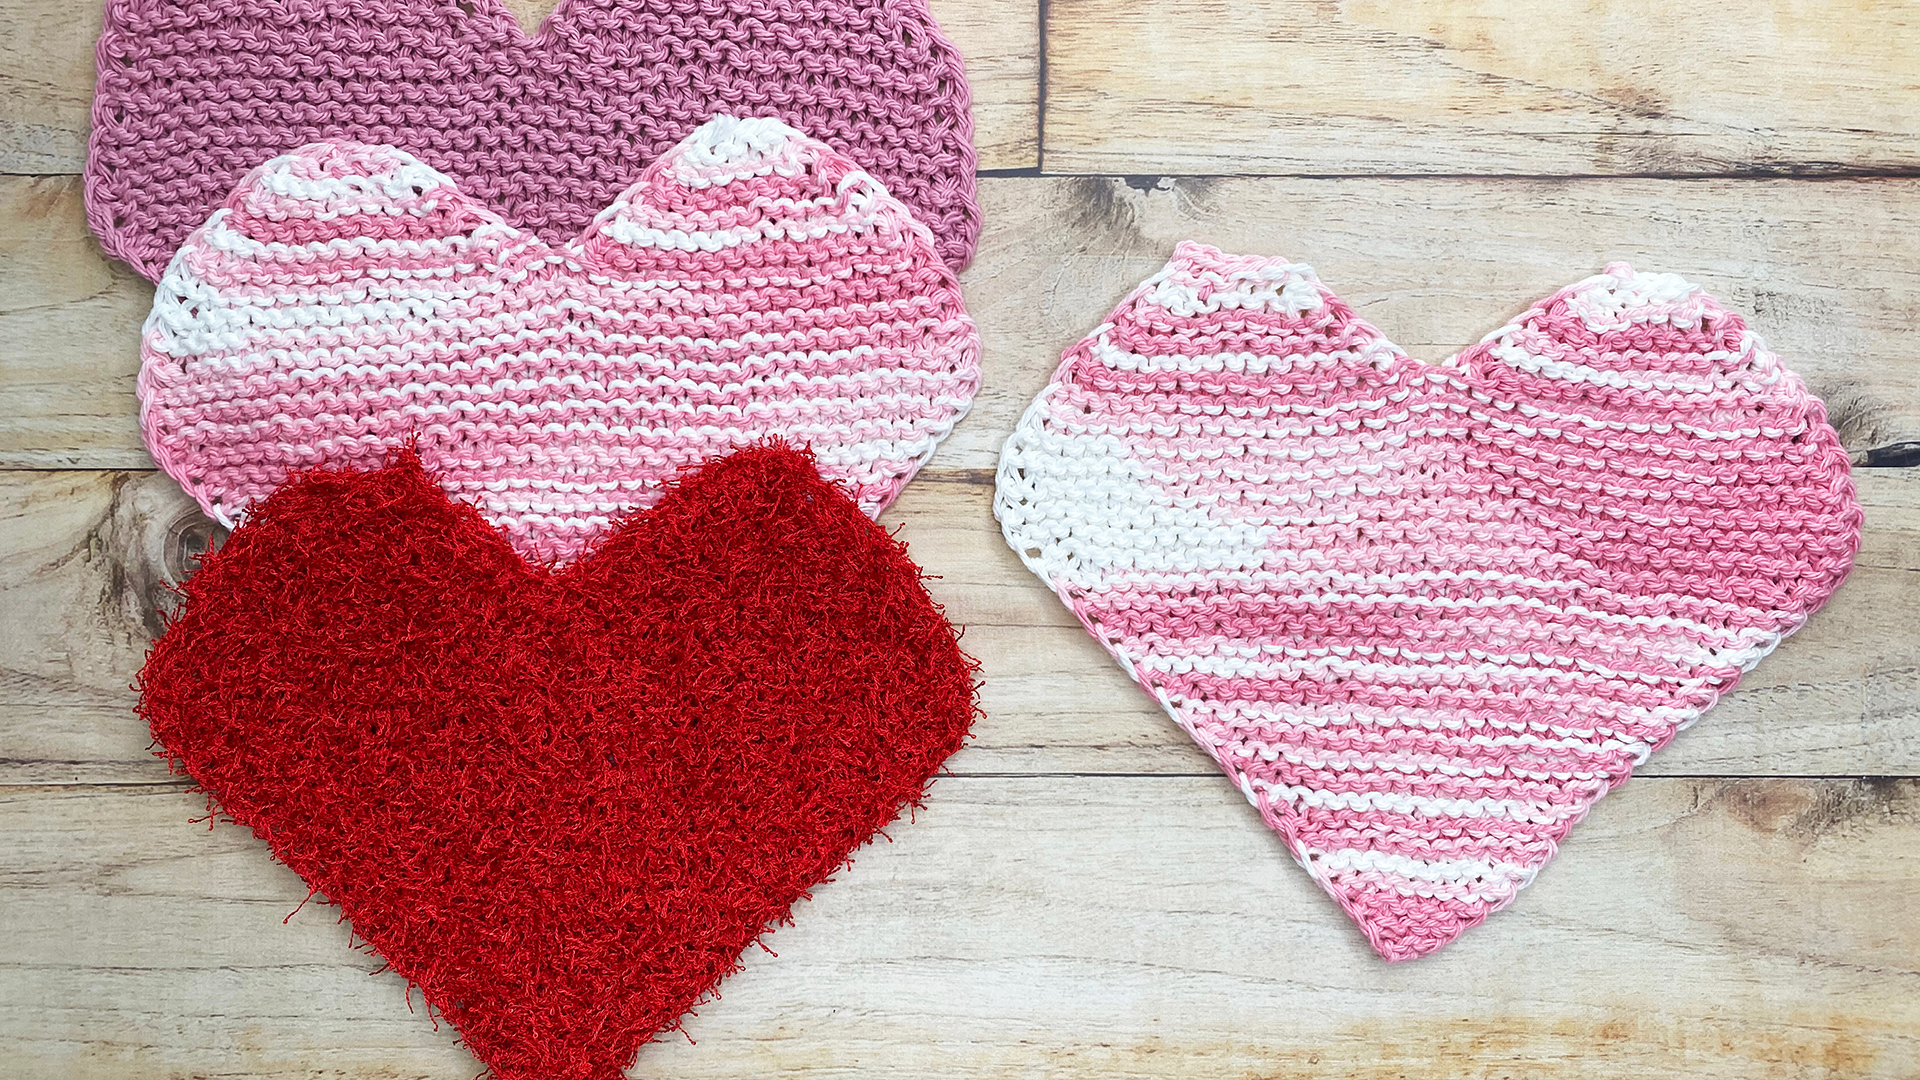 Free Knitting Pattern - Heart Dishcloth